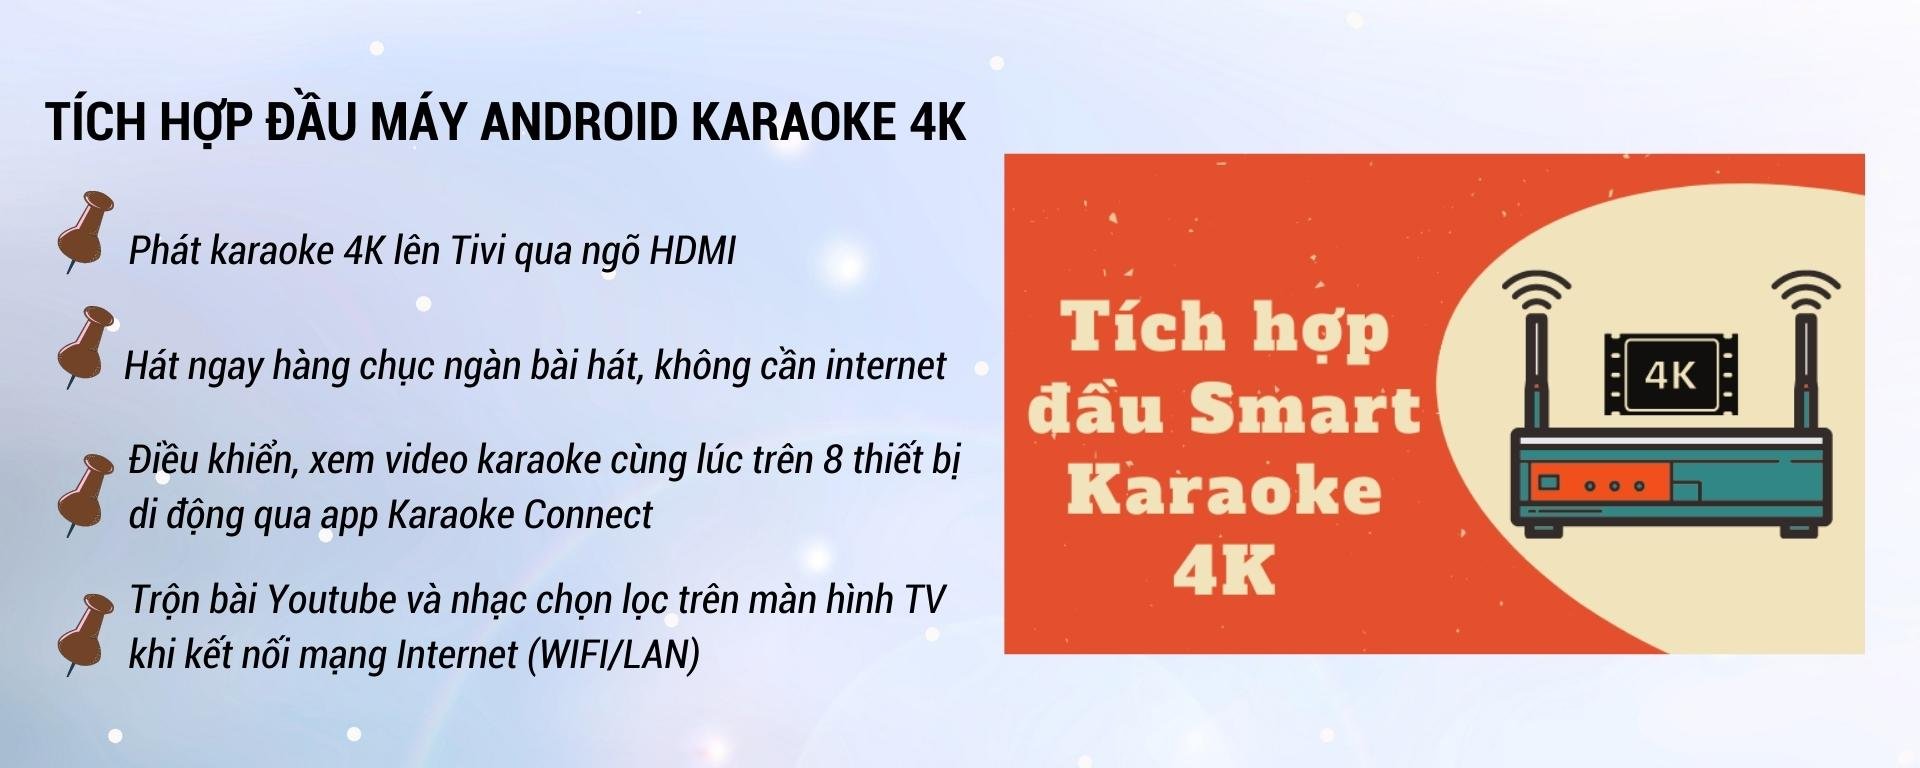 tich-hop-dau-may-android-karaoke-4k-acnos_f3962ca4cfd240109e9a9ca4b7d368cb.jpg